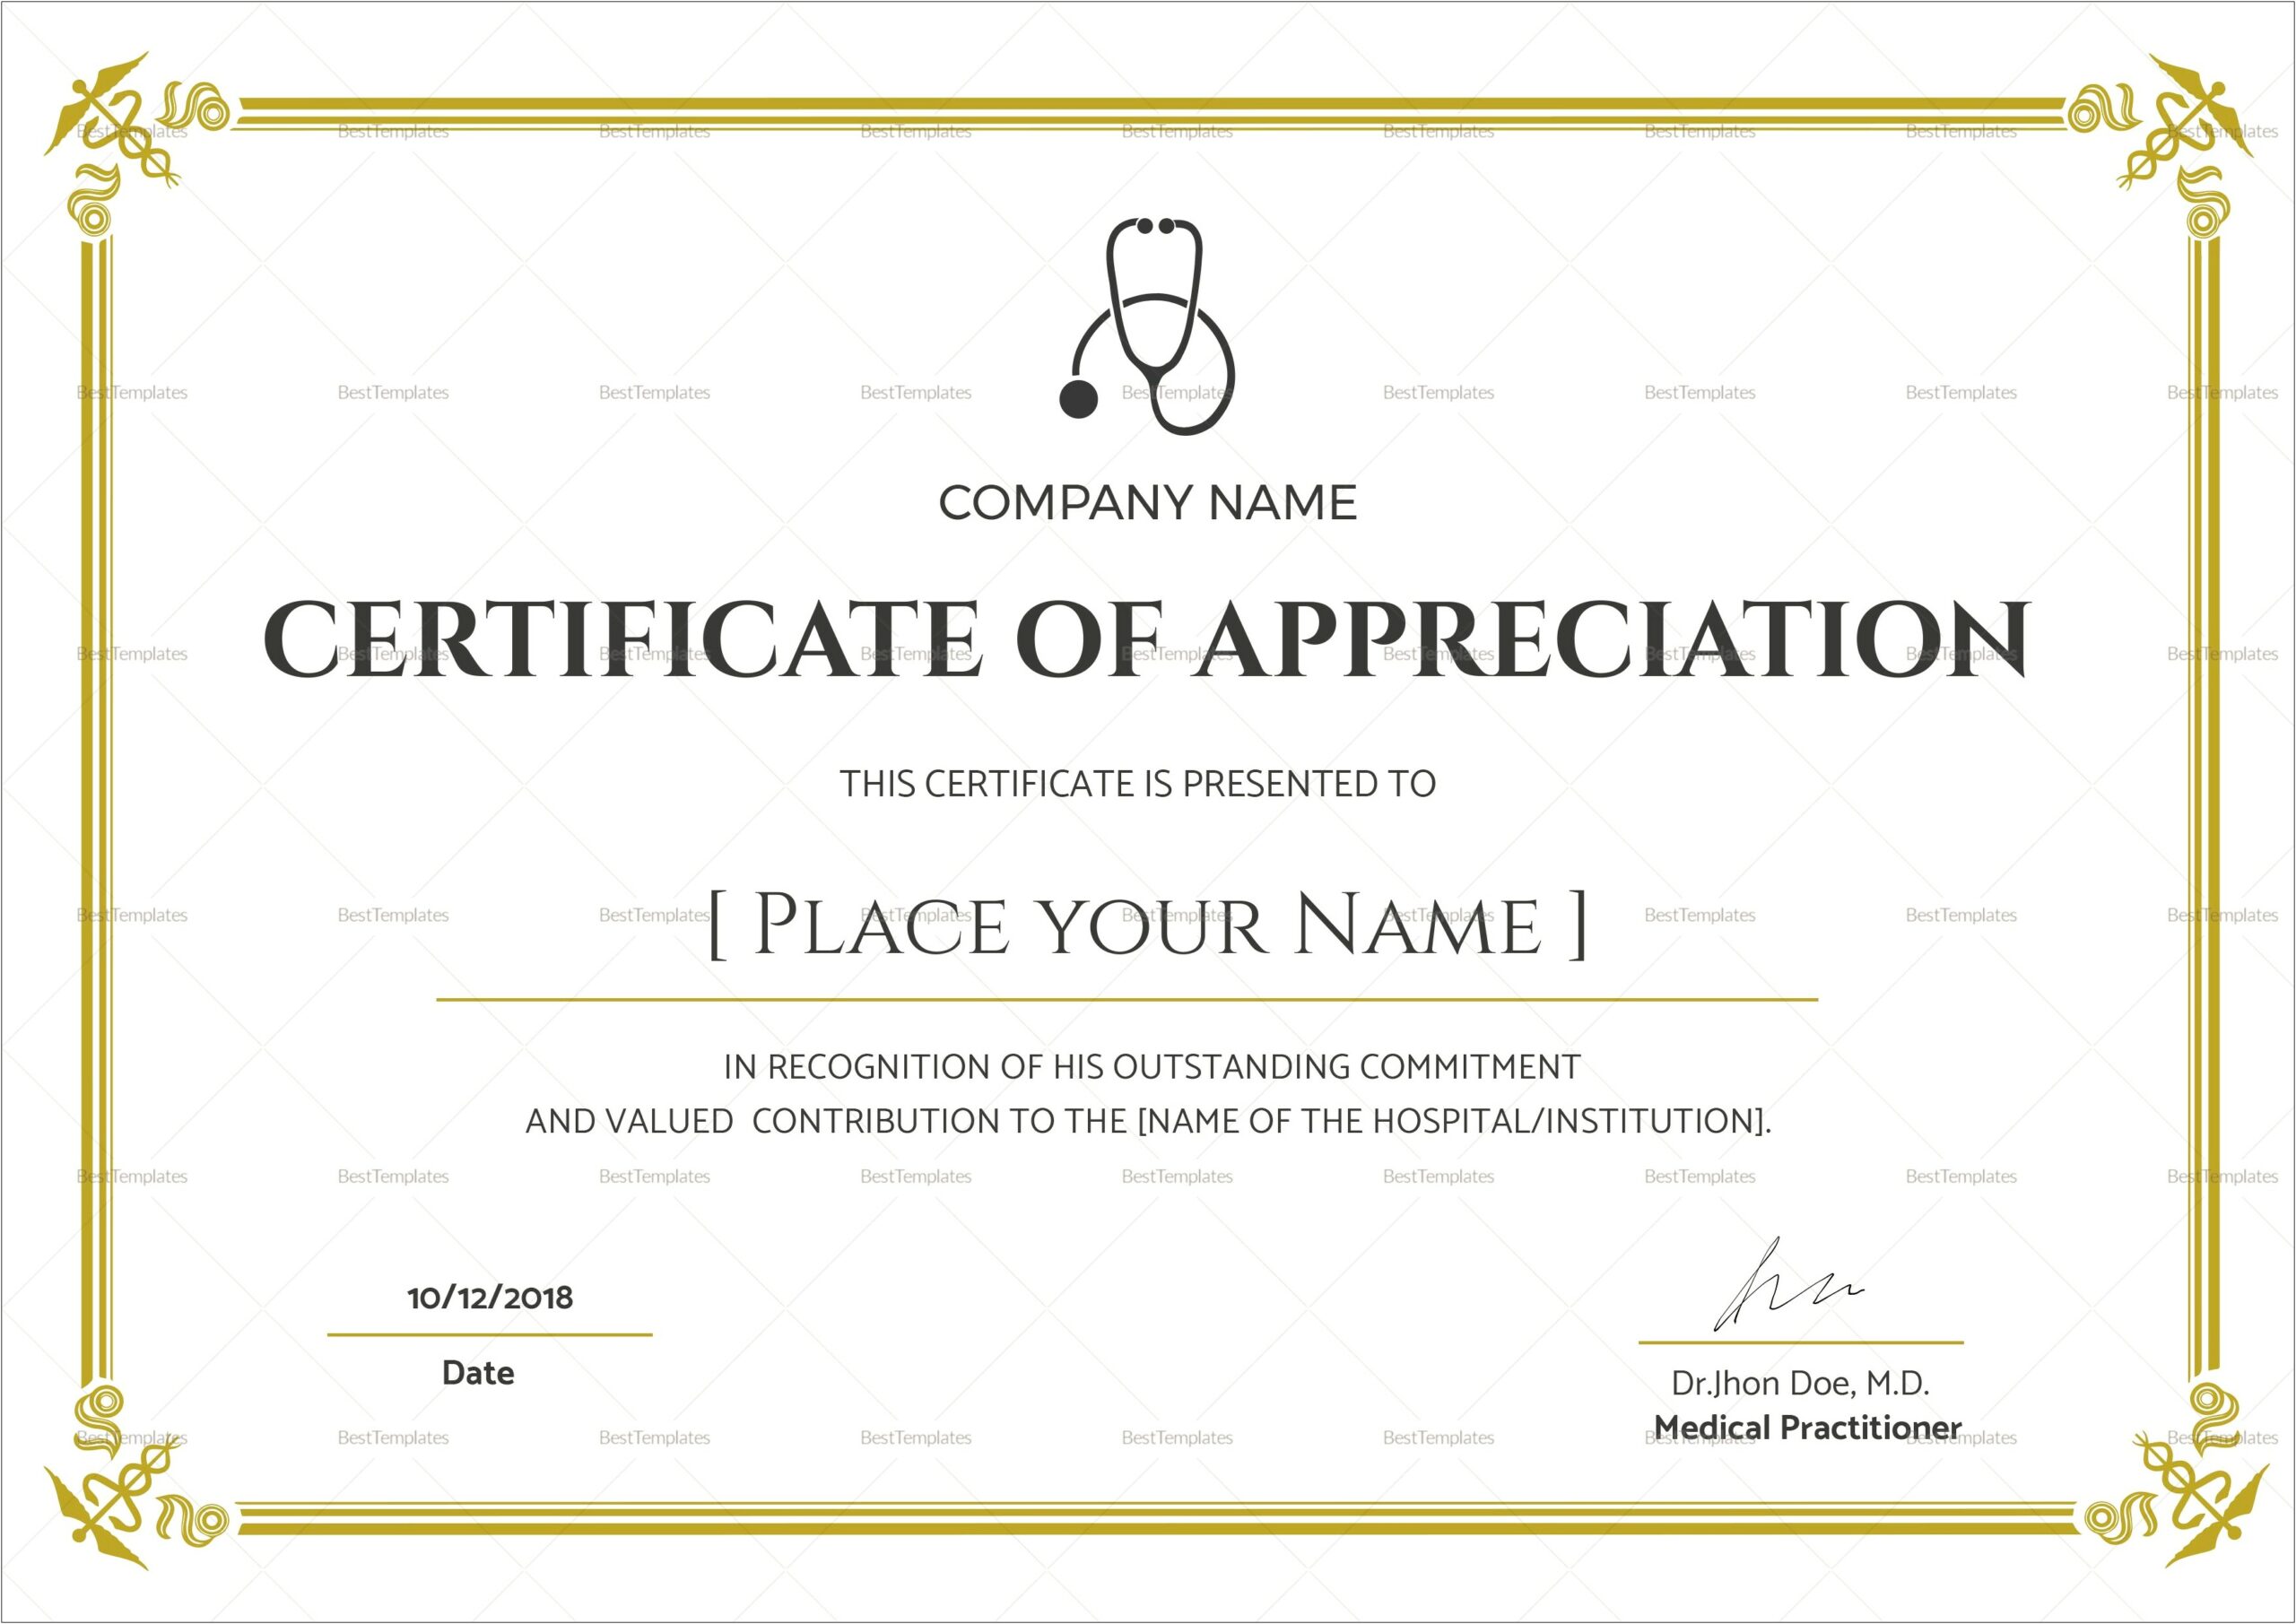 Microsoft Word 2010 Certificate Of Appreciation Template